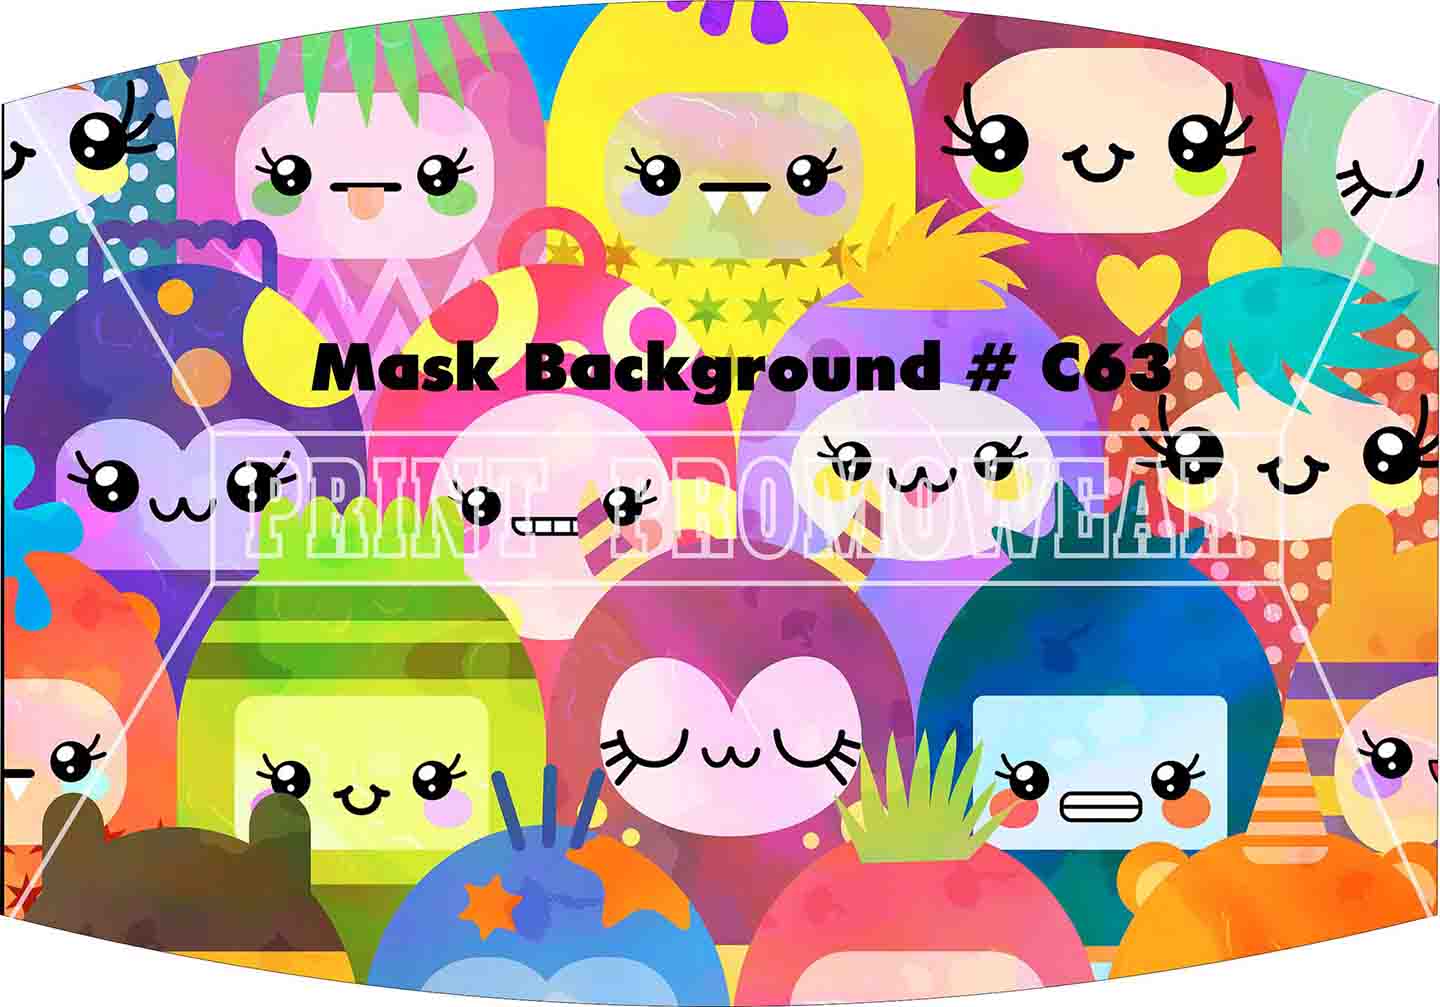 Image/MaskBackground/c63.jpg